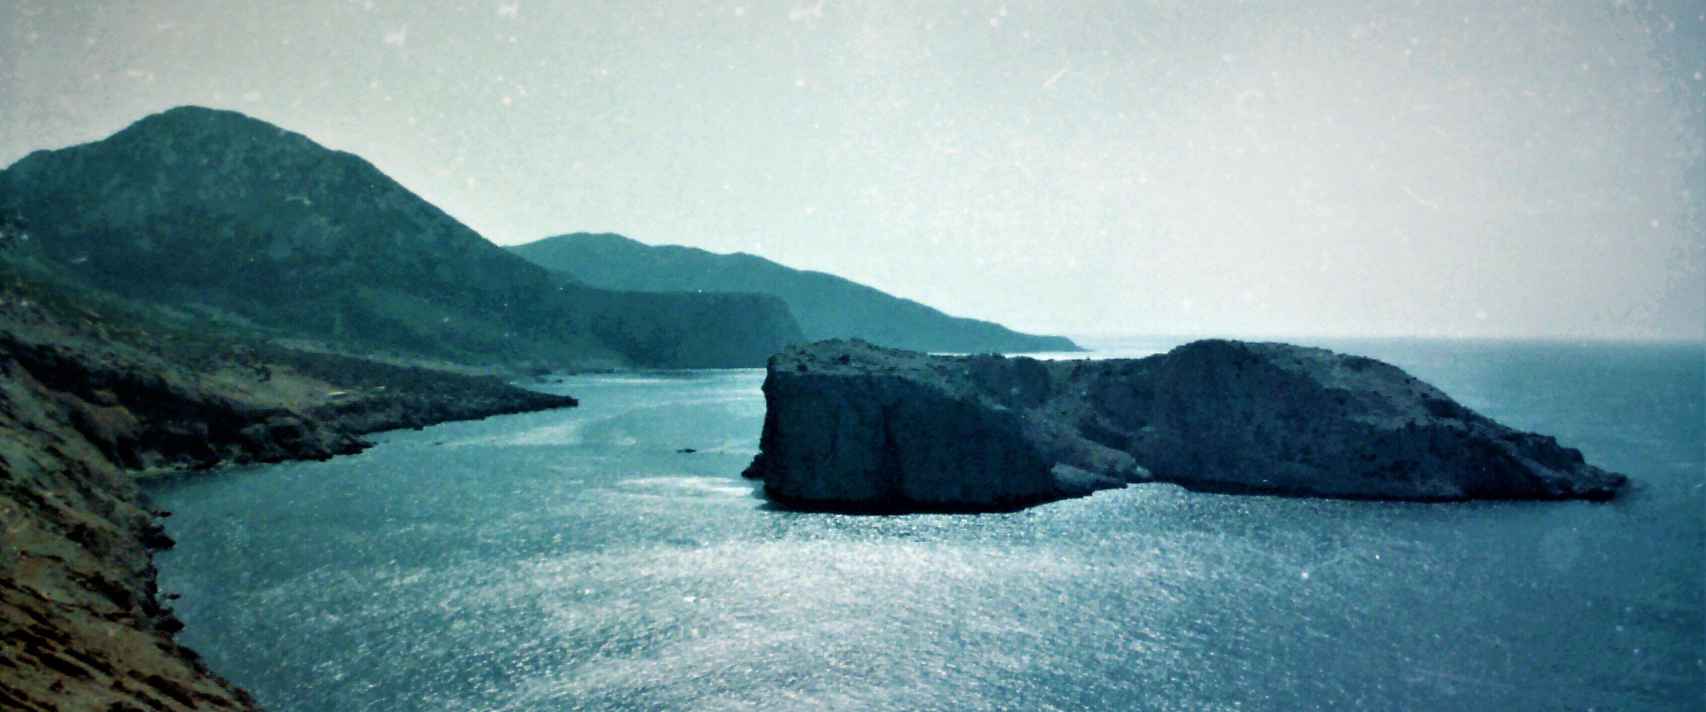 Vista de la isla Perejil o Laila, frente a la costa de Marruecos, en una imagen de 2003.